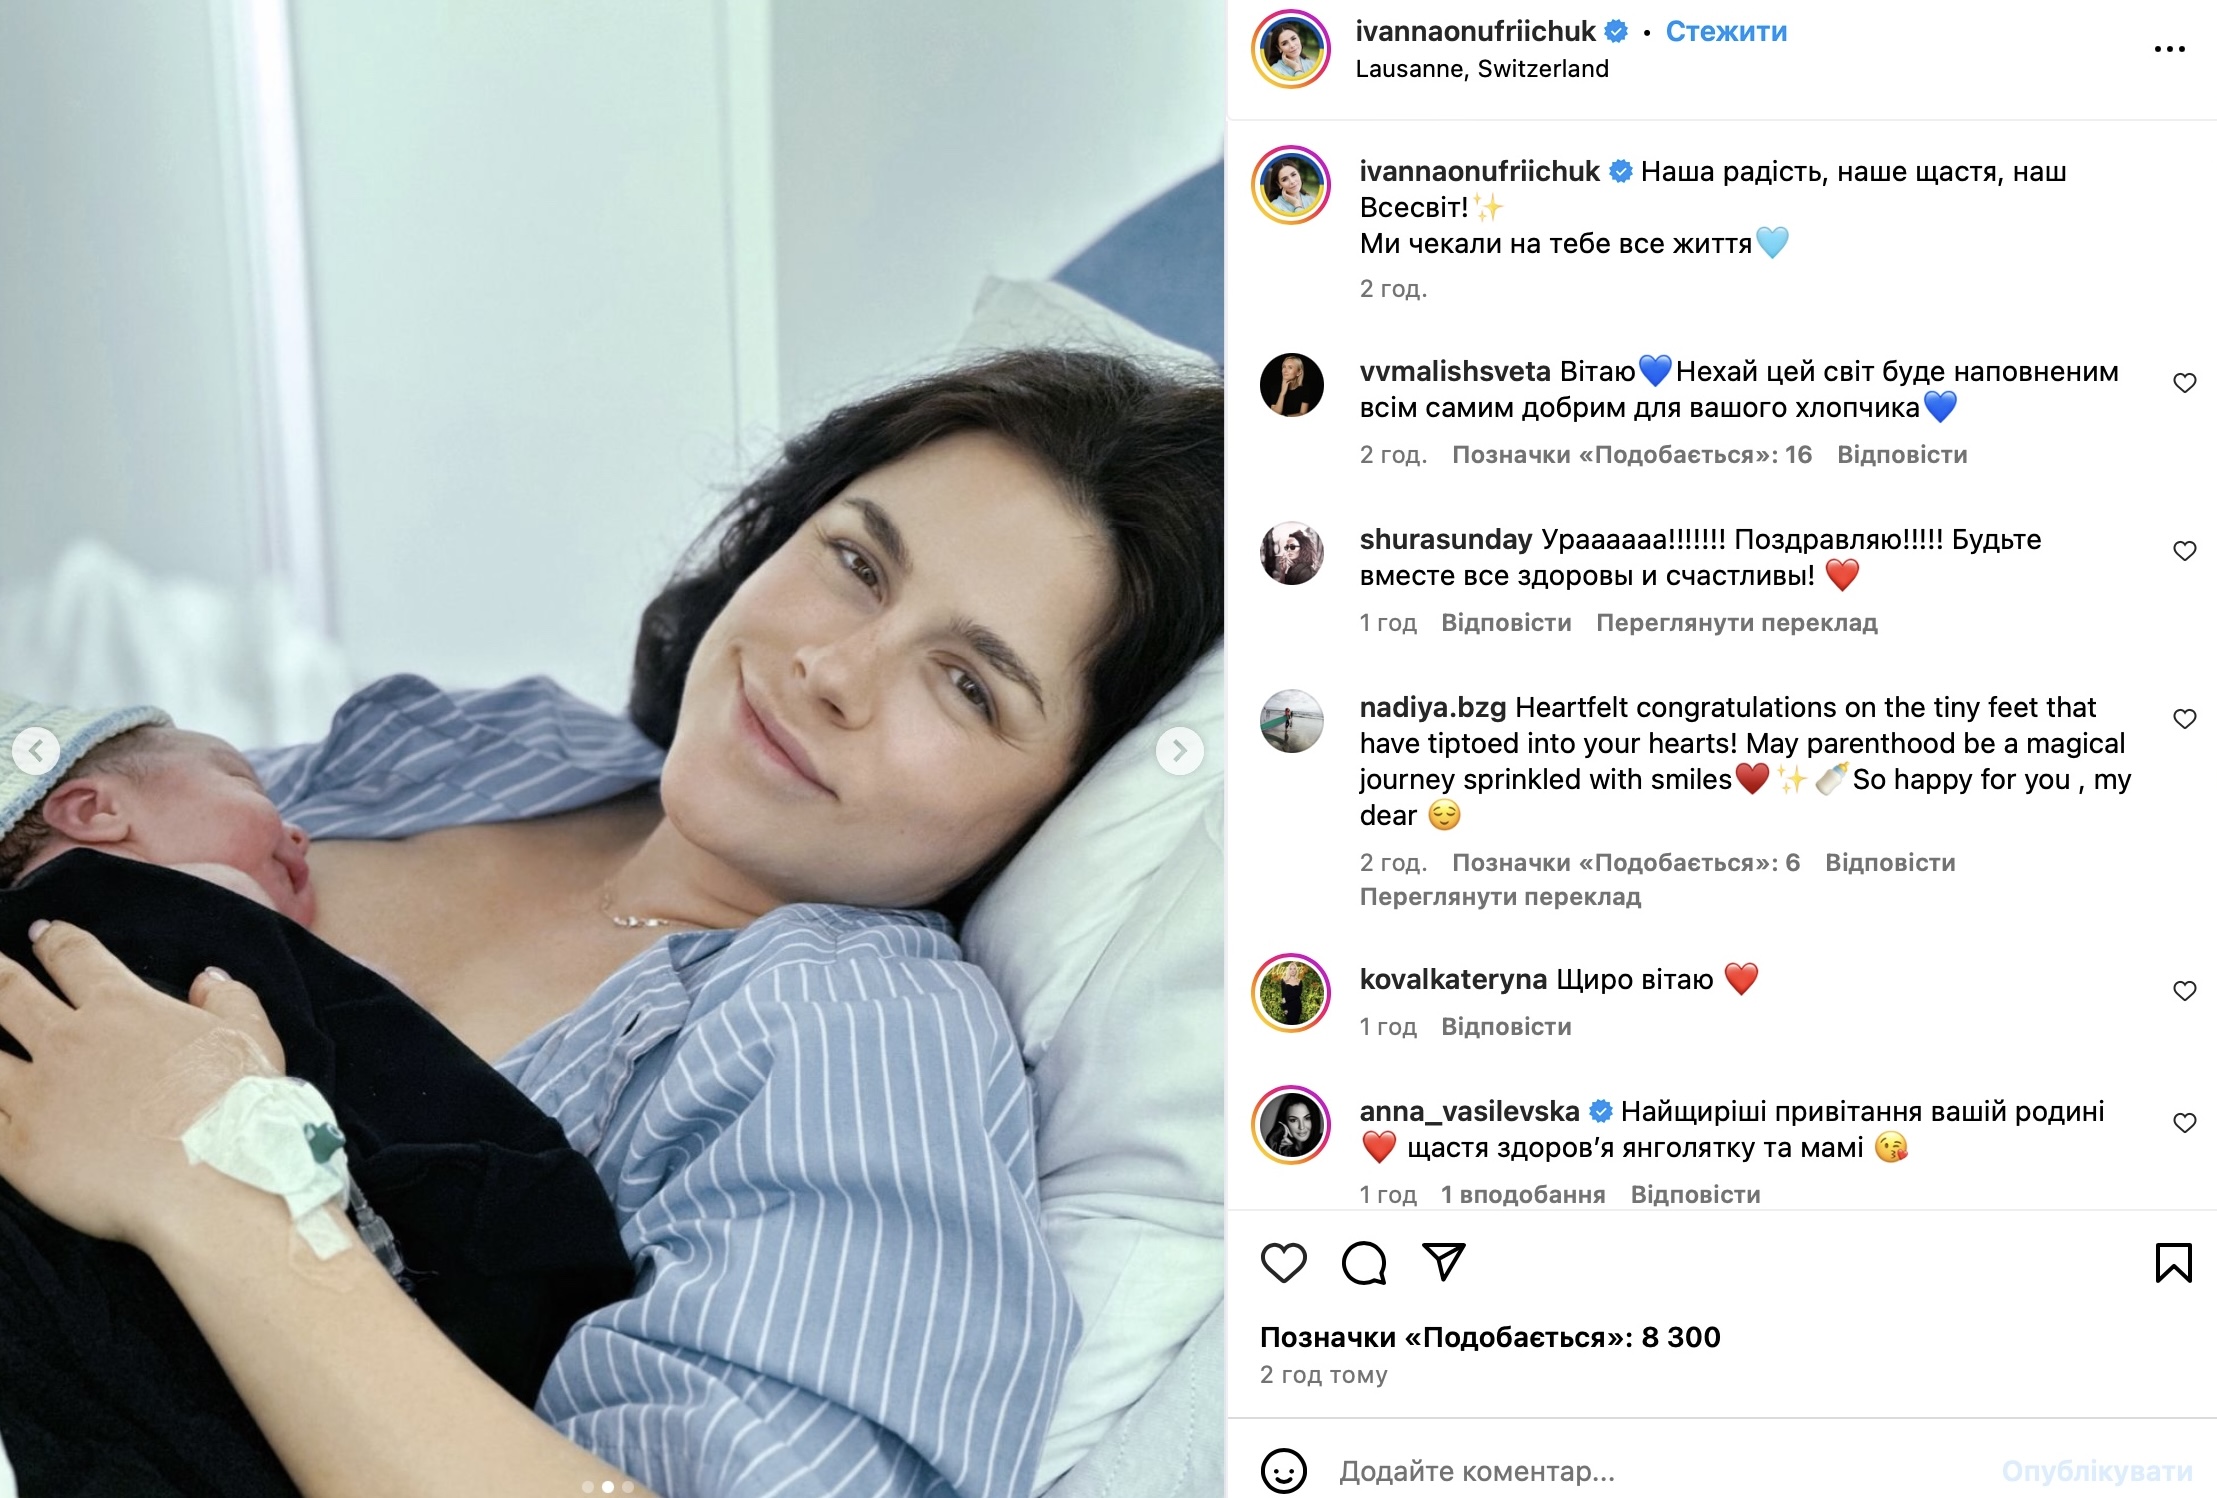 Телеведуча каналу 1+1 Іванна Онуфрійчук вперше стала мамою. Фото з Instagram @ivannaonufriichuk